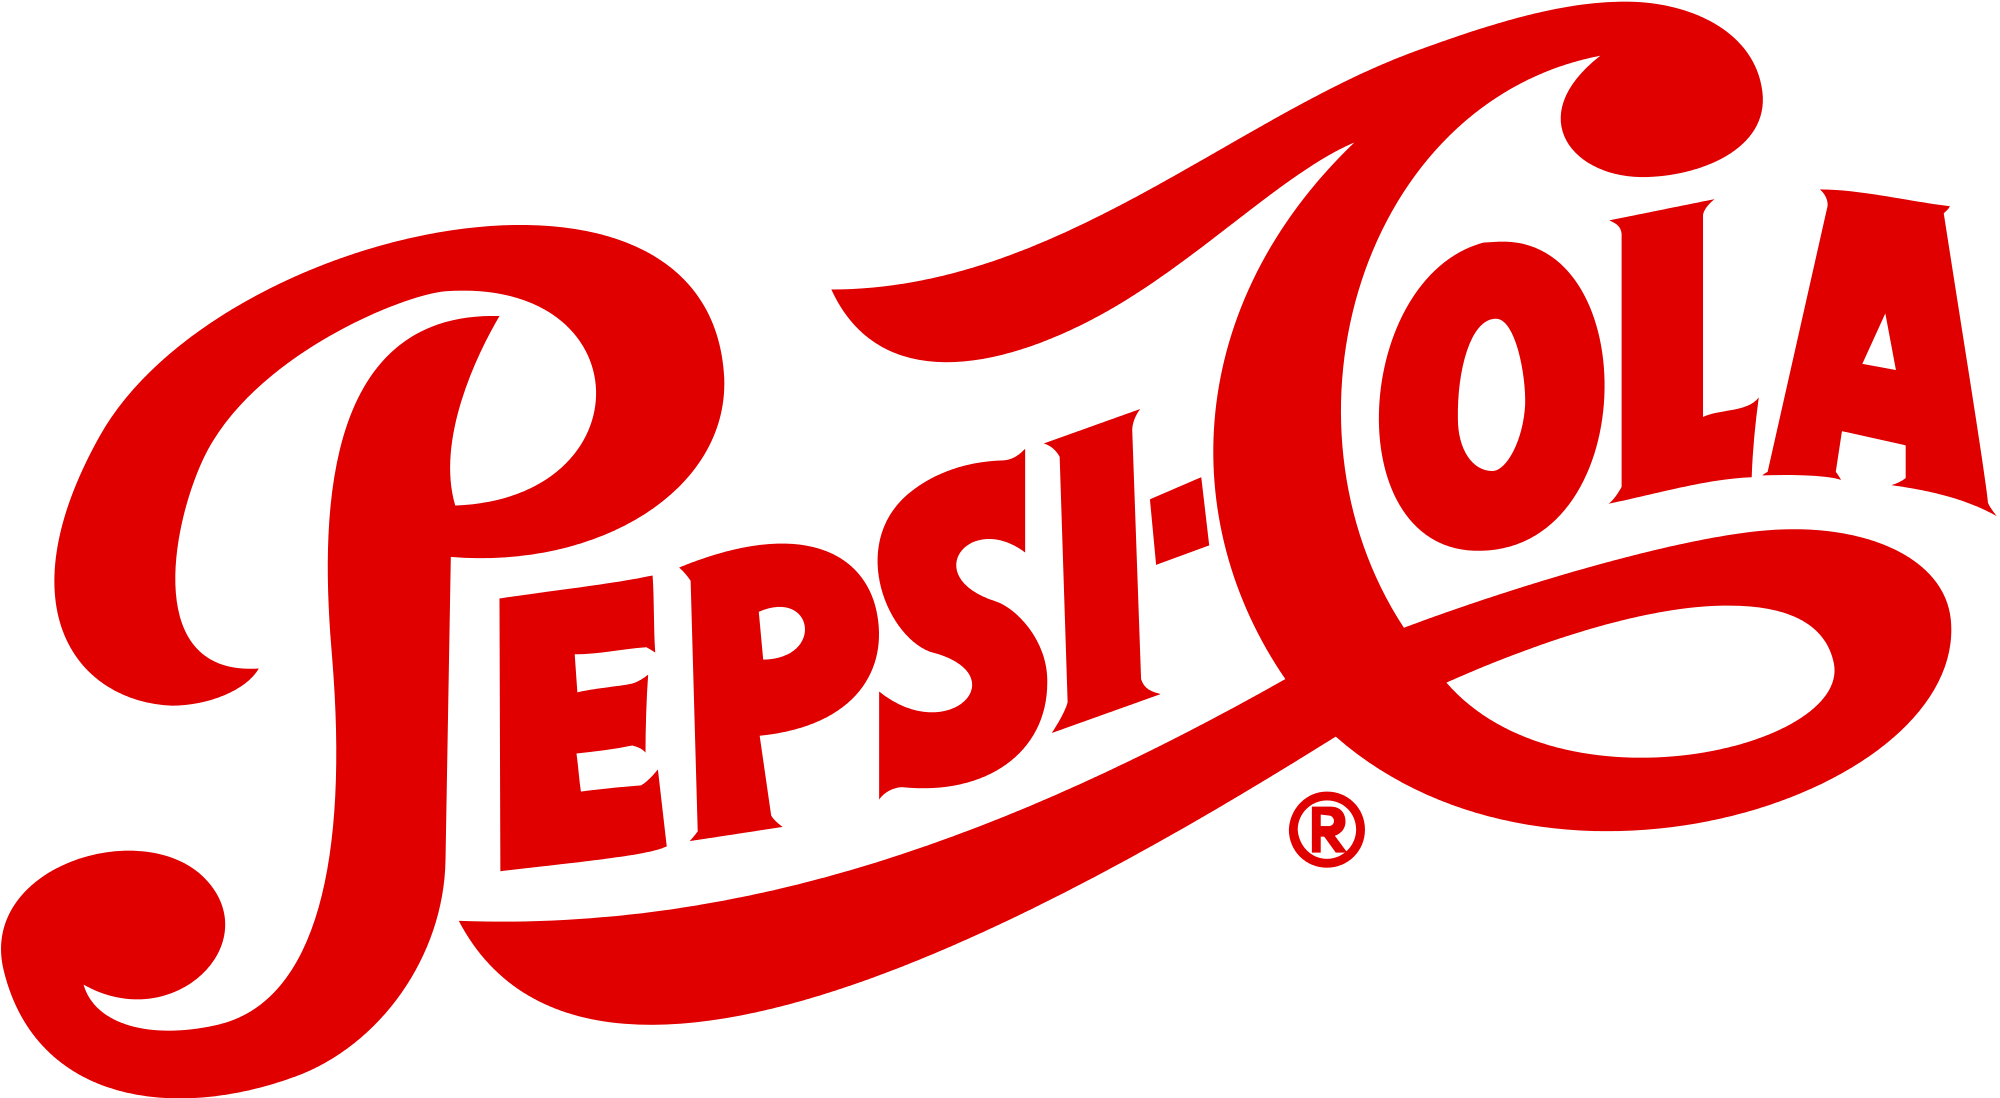 Pepsi Cola logo, logotype